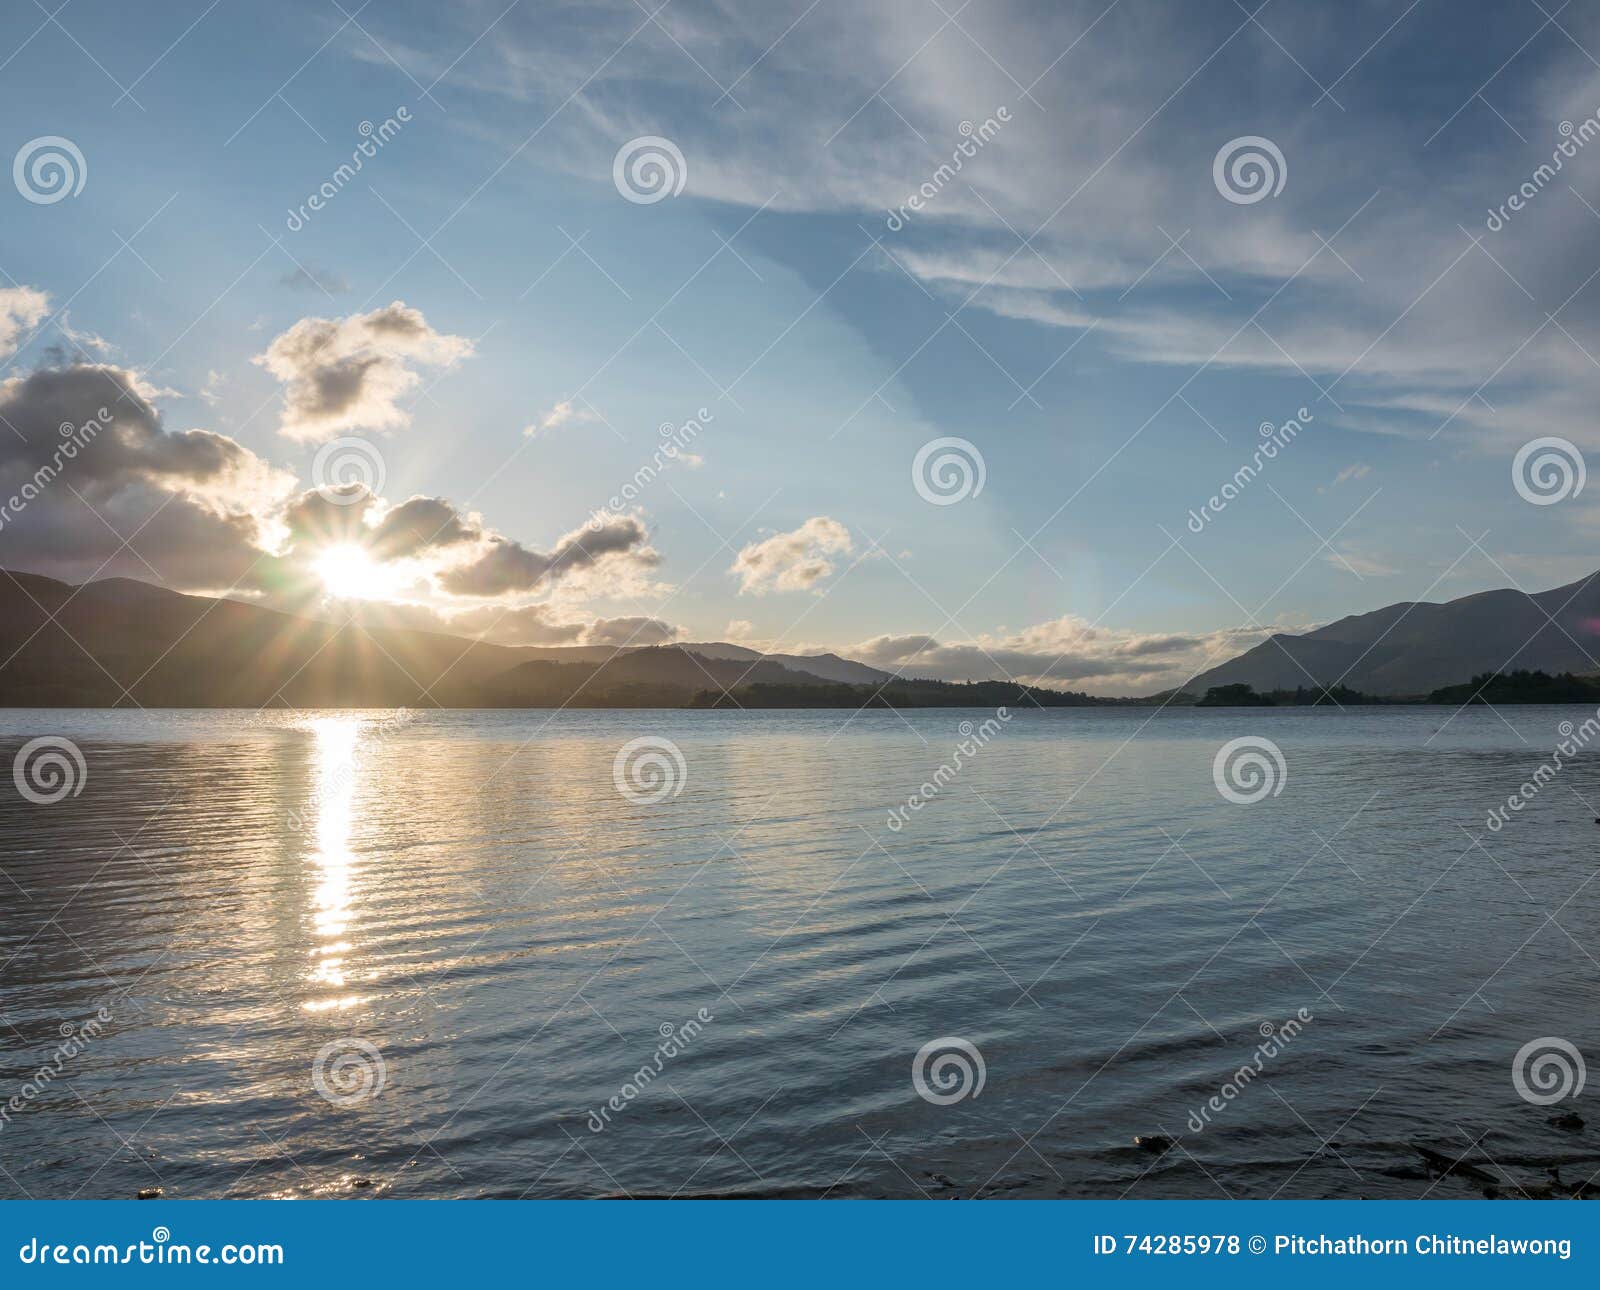 Lake side landscape view stock photo. Image of coast - 74285978